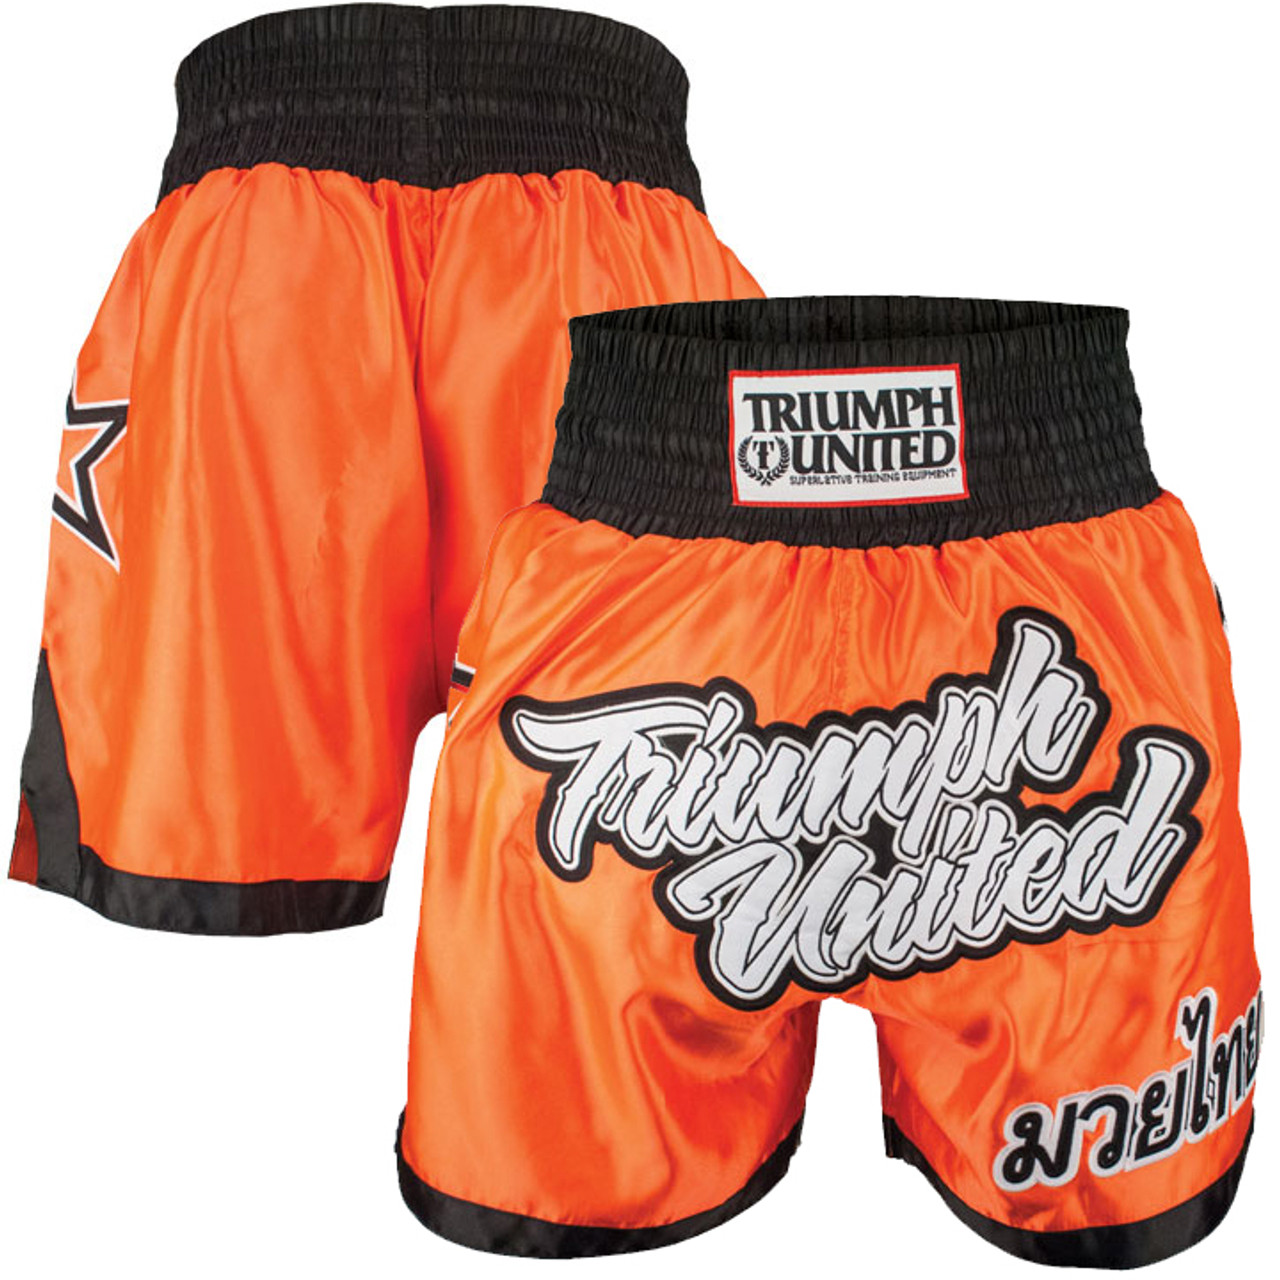 Triumph United Muay Thai Fighter Shorts